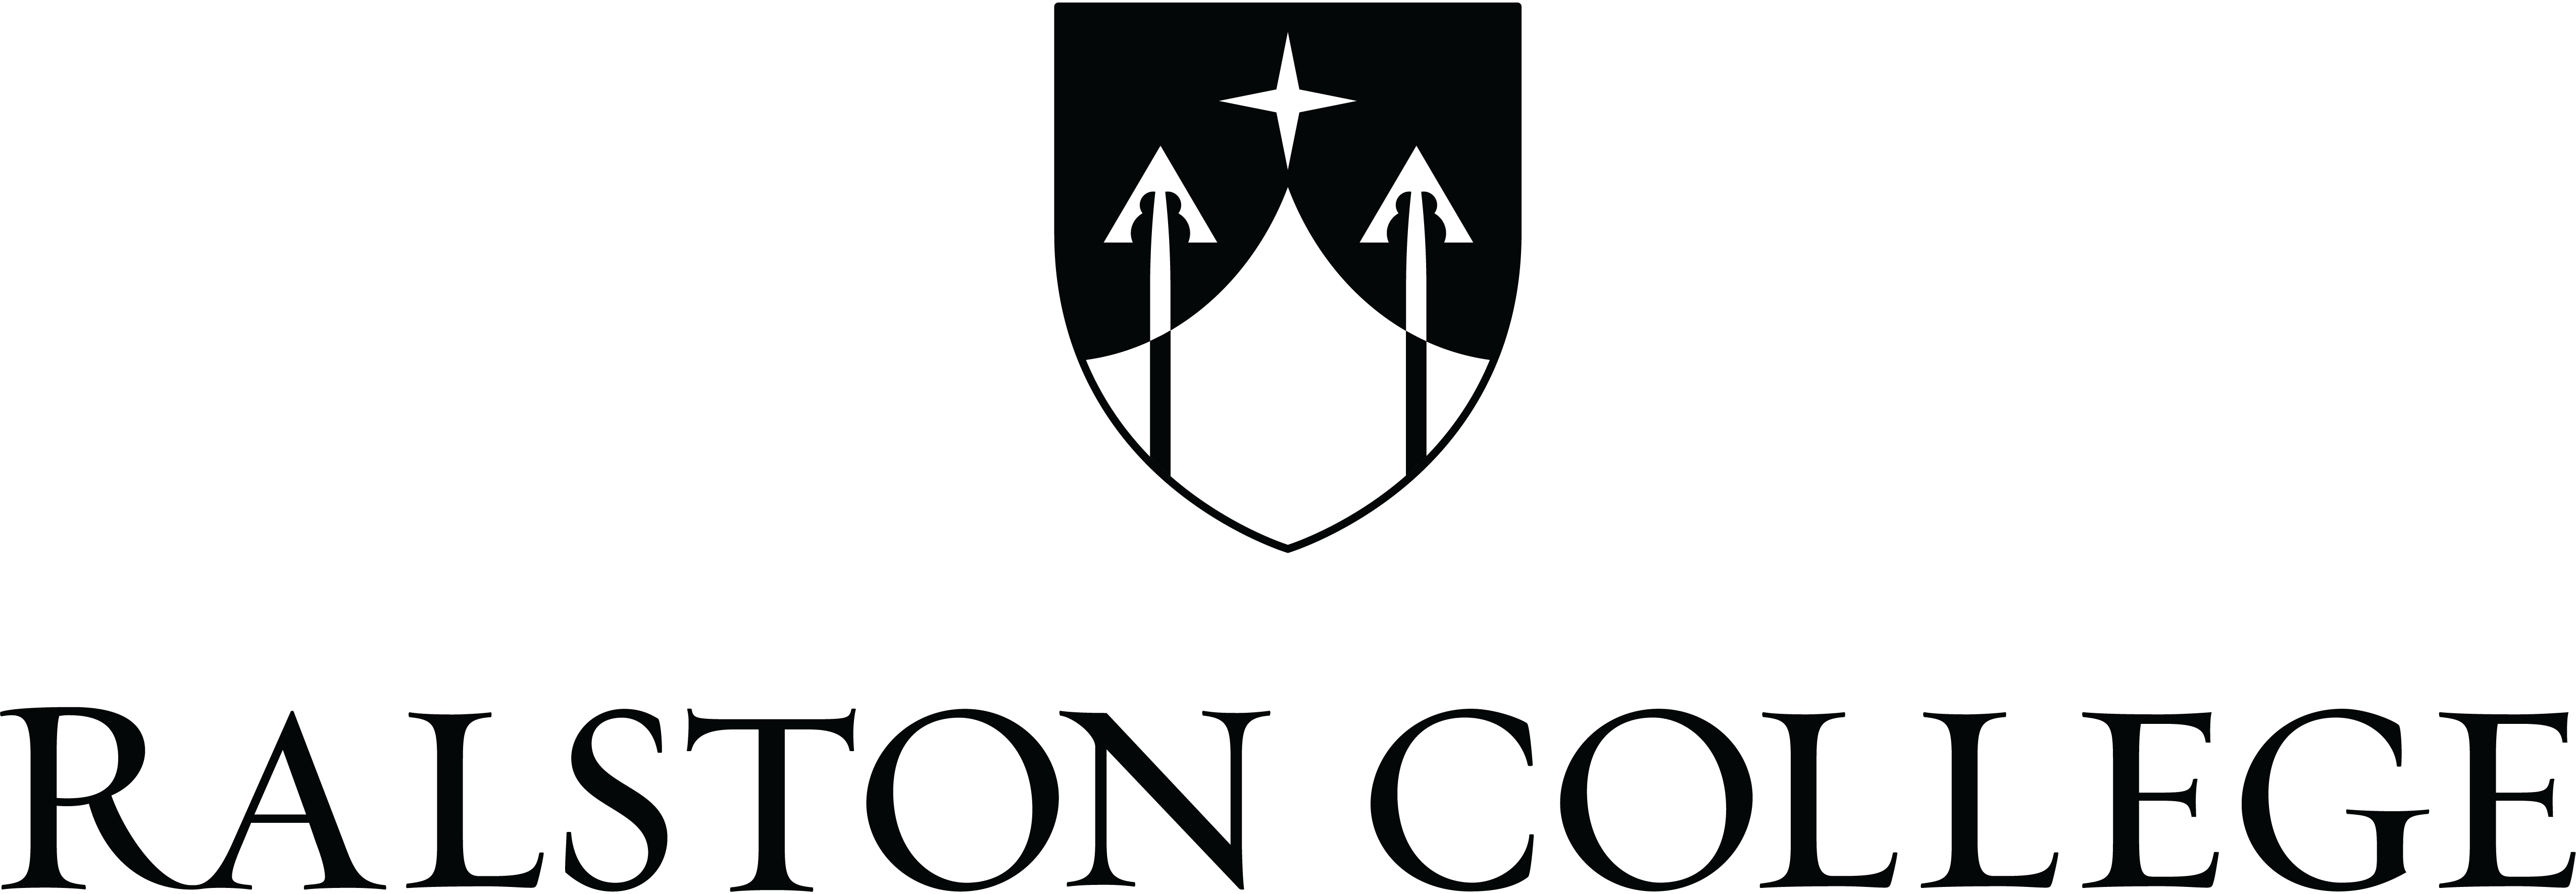 Ralston College logo